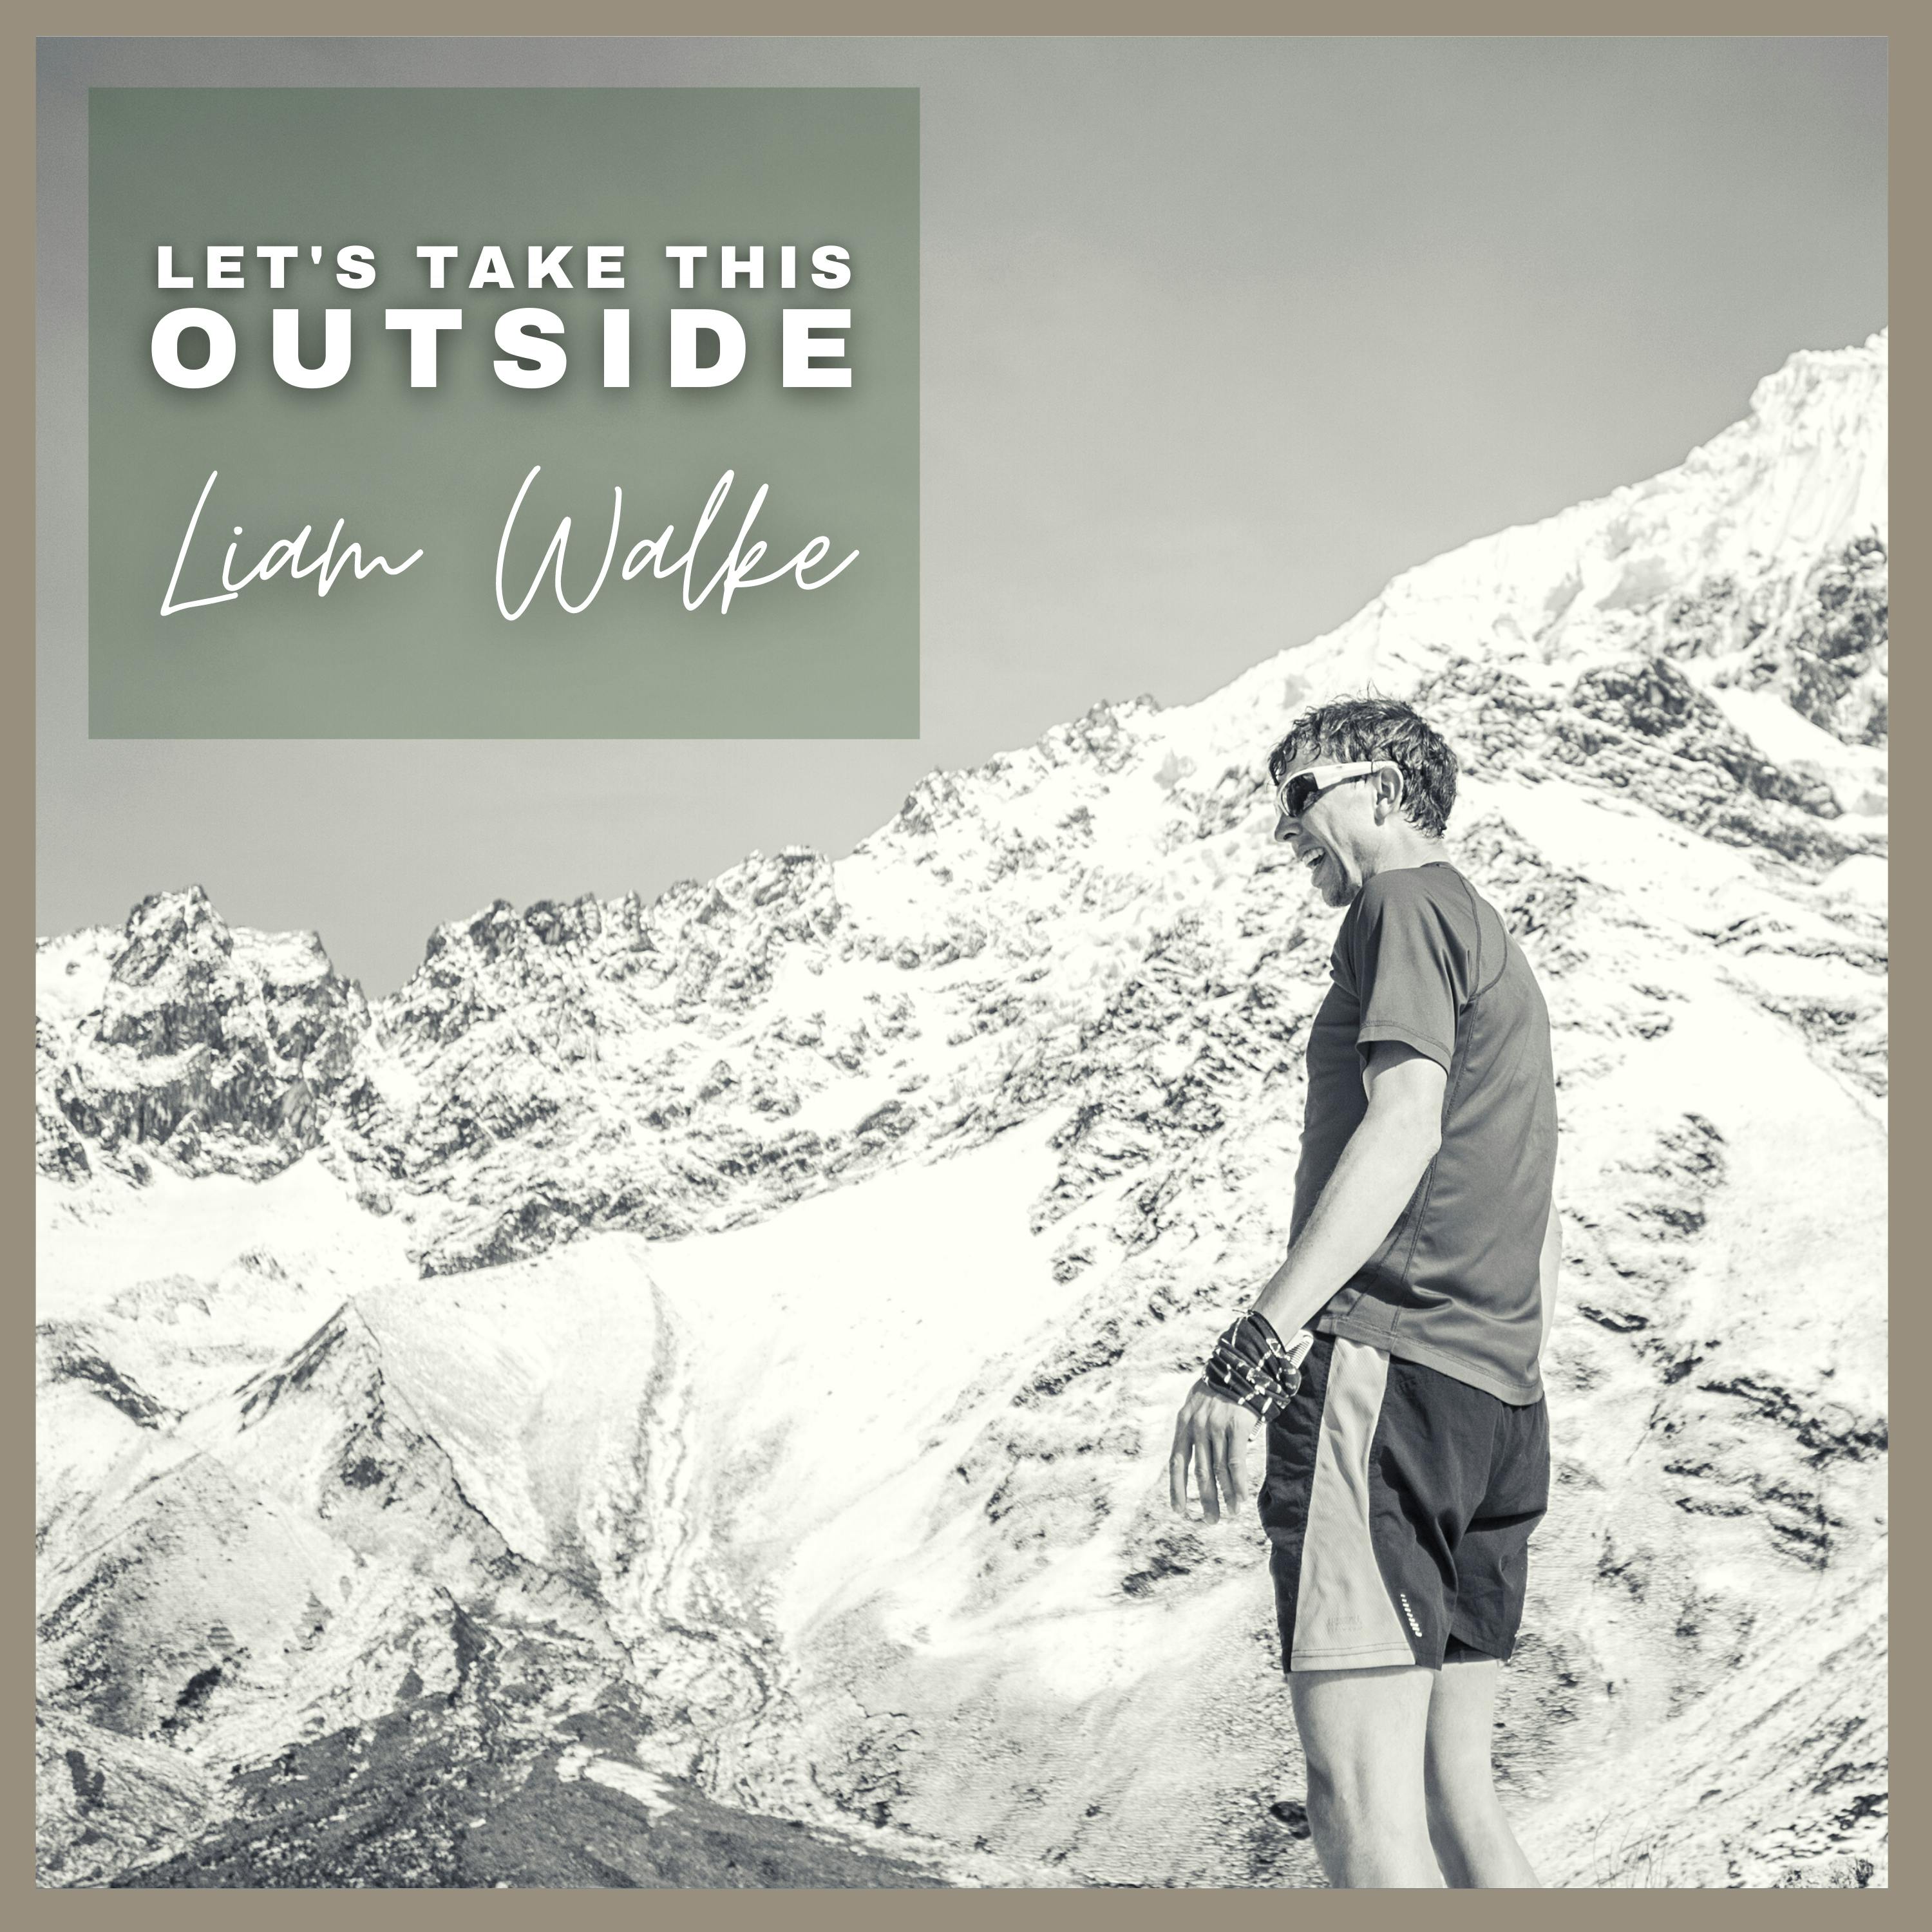 Liam Walke - Endurance Athlete and Coach